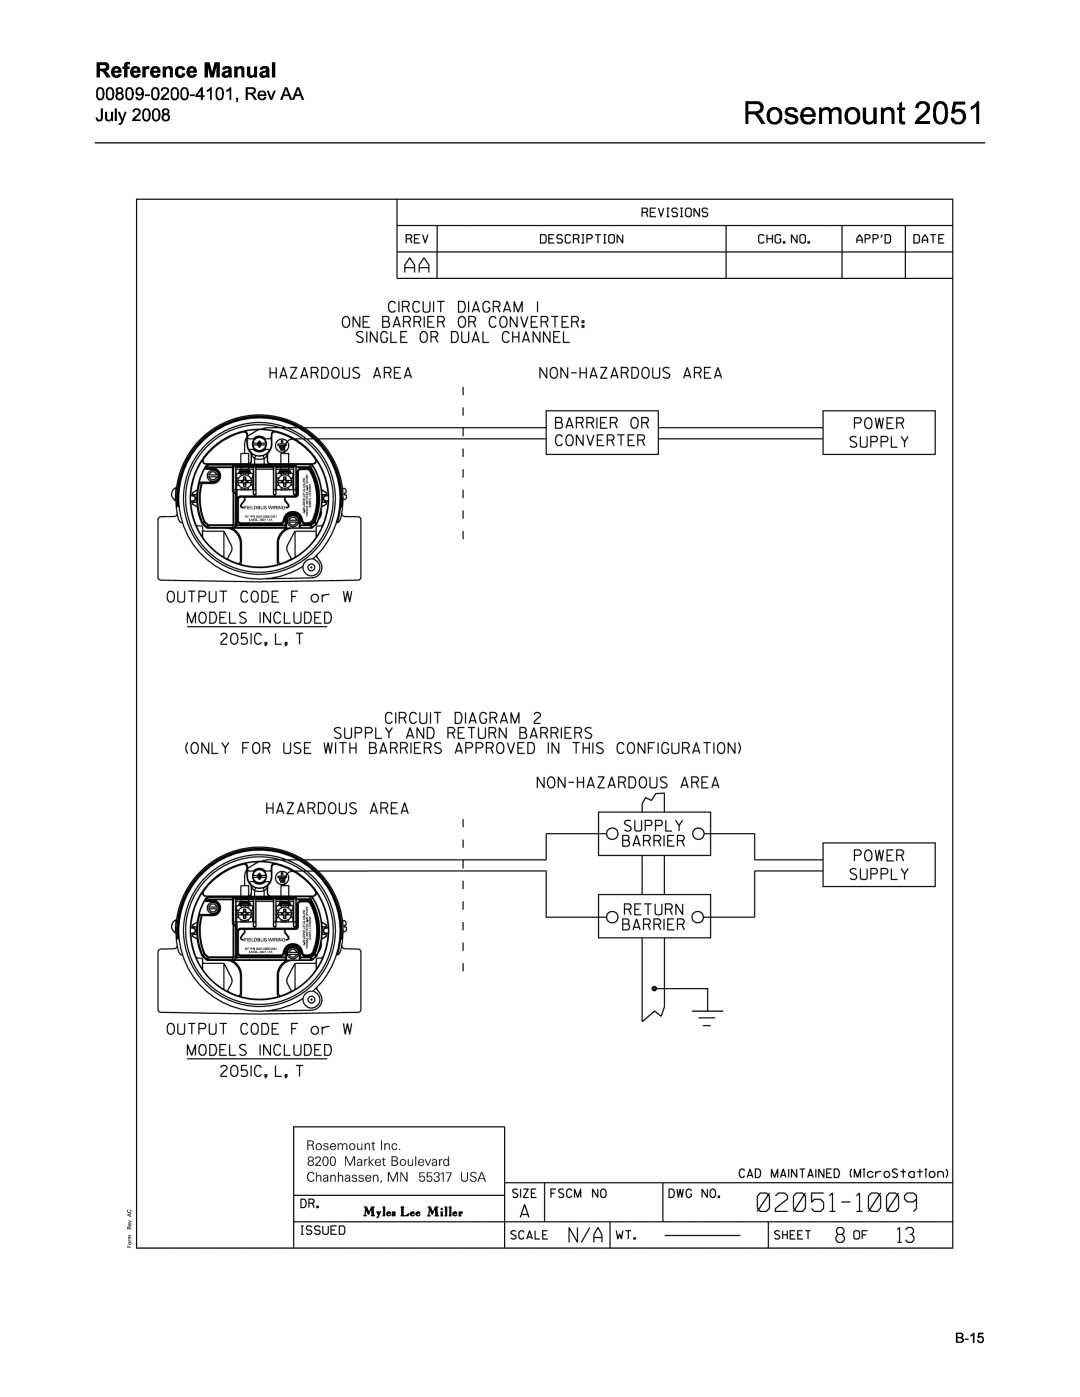 Emerson Process Management 2051 manual Rosemount, Reference Manual, B-15 